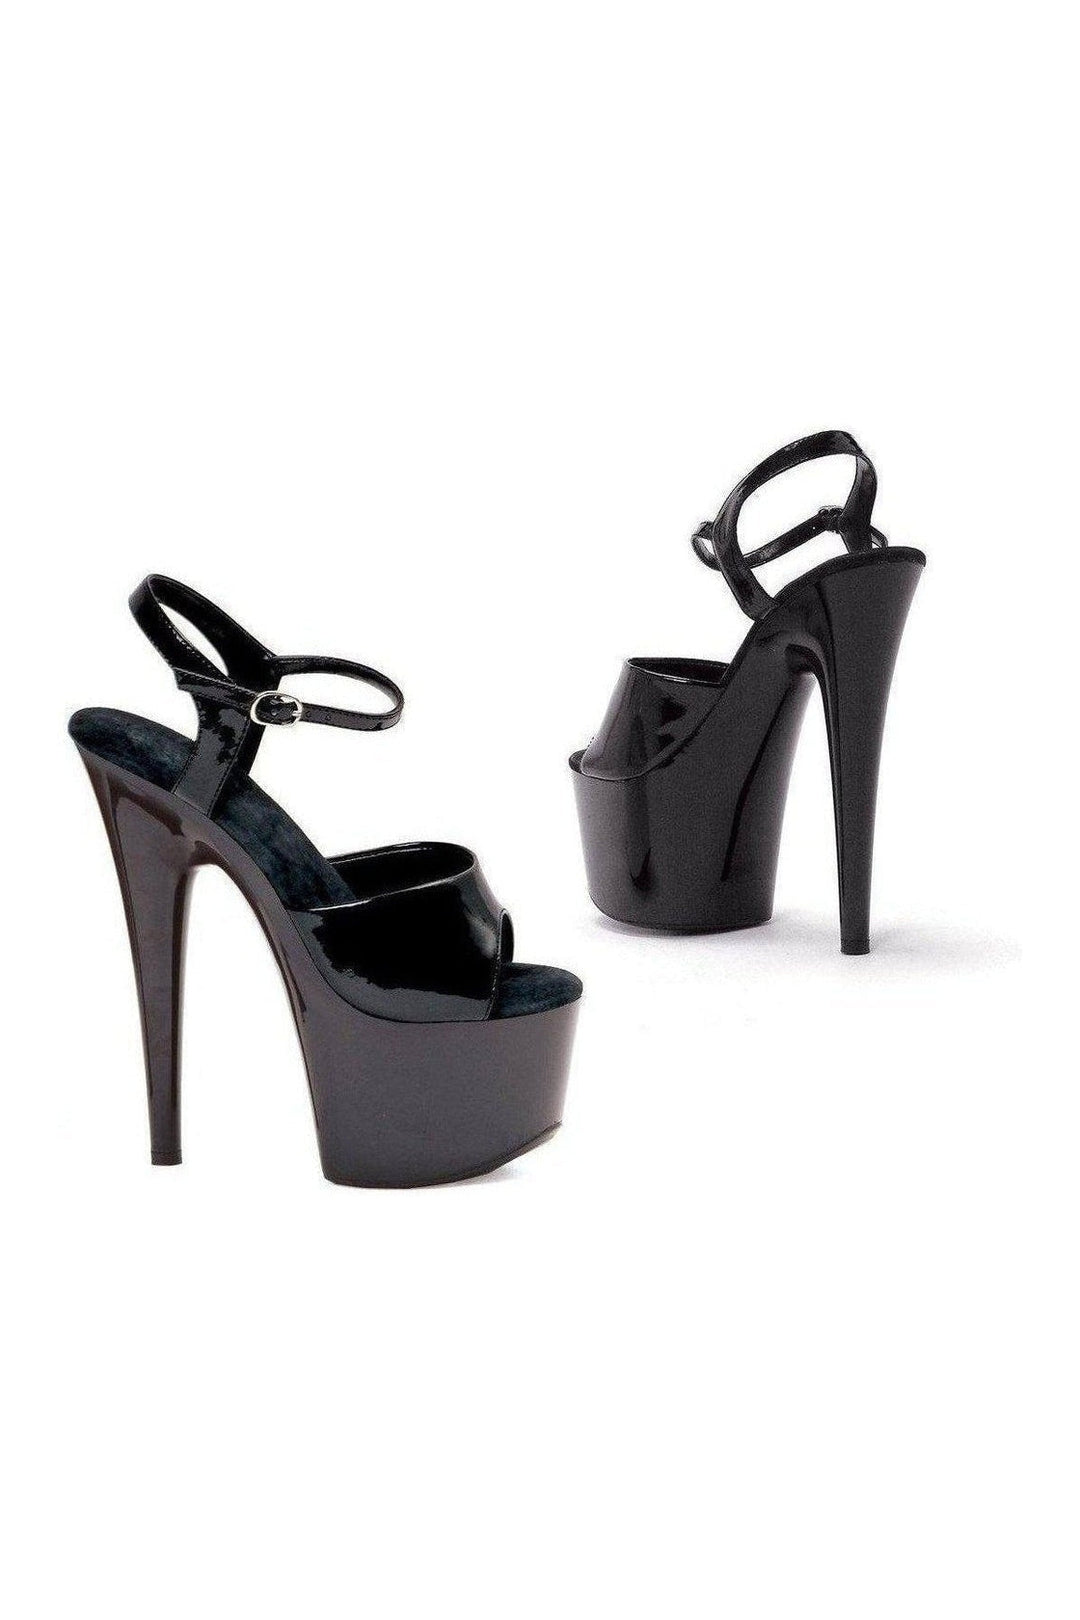 Ellie Shoes Black Sandals Platform Stripper Shoes | Buy at Sexyshoes.com